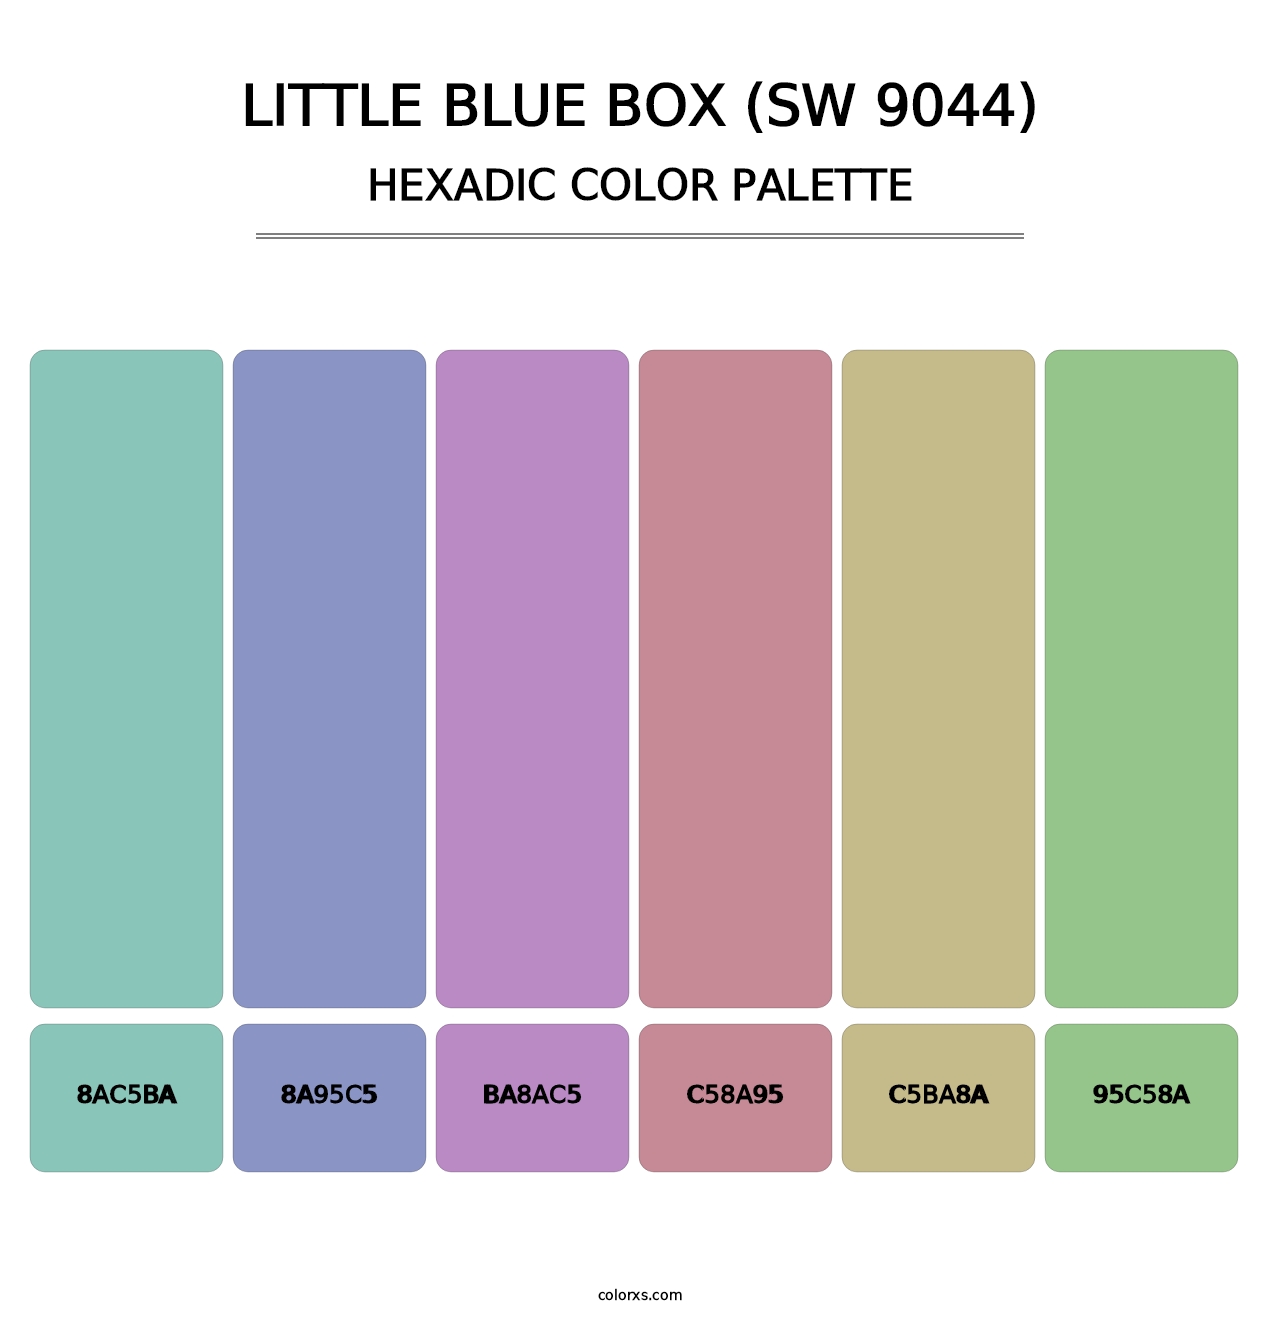 Little Blue Box (SW 9044) - Hexadic Color Palette